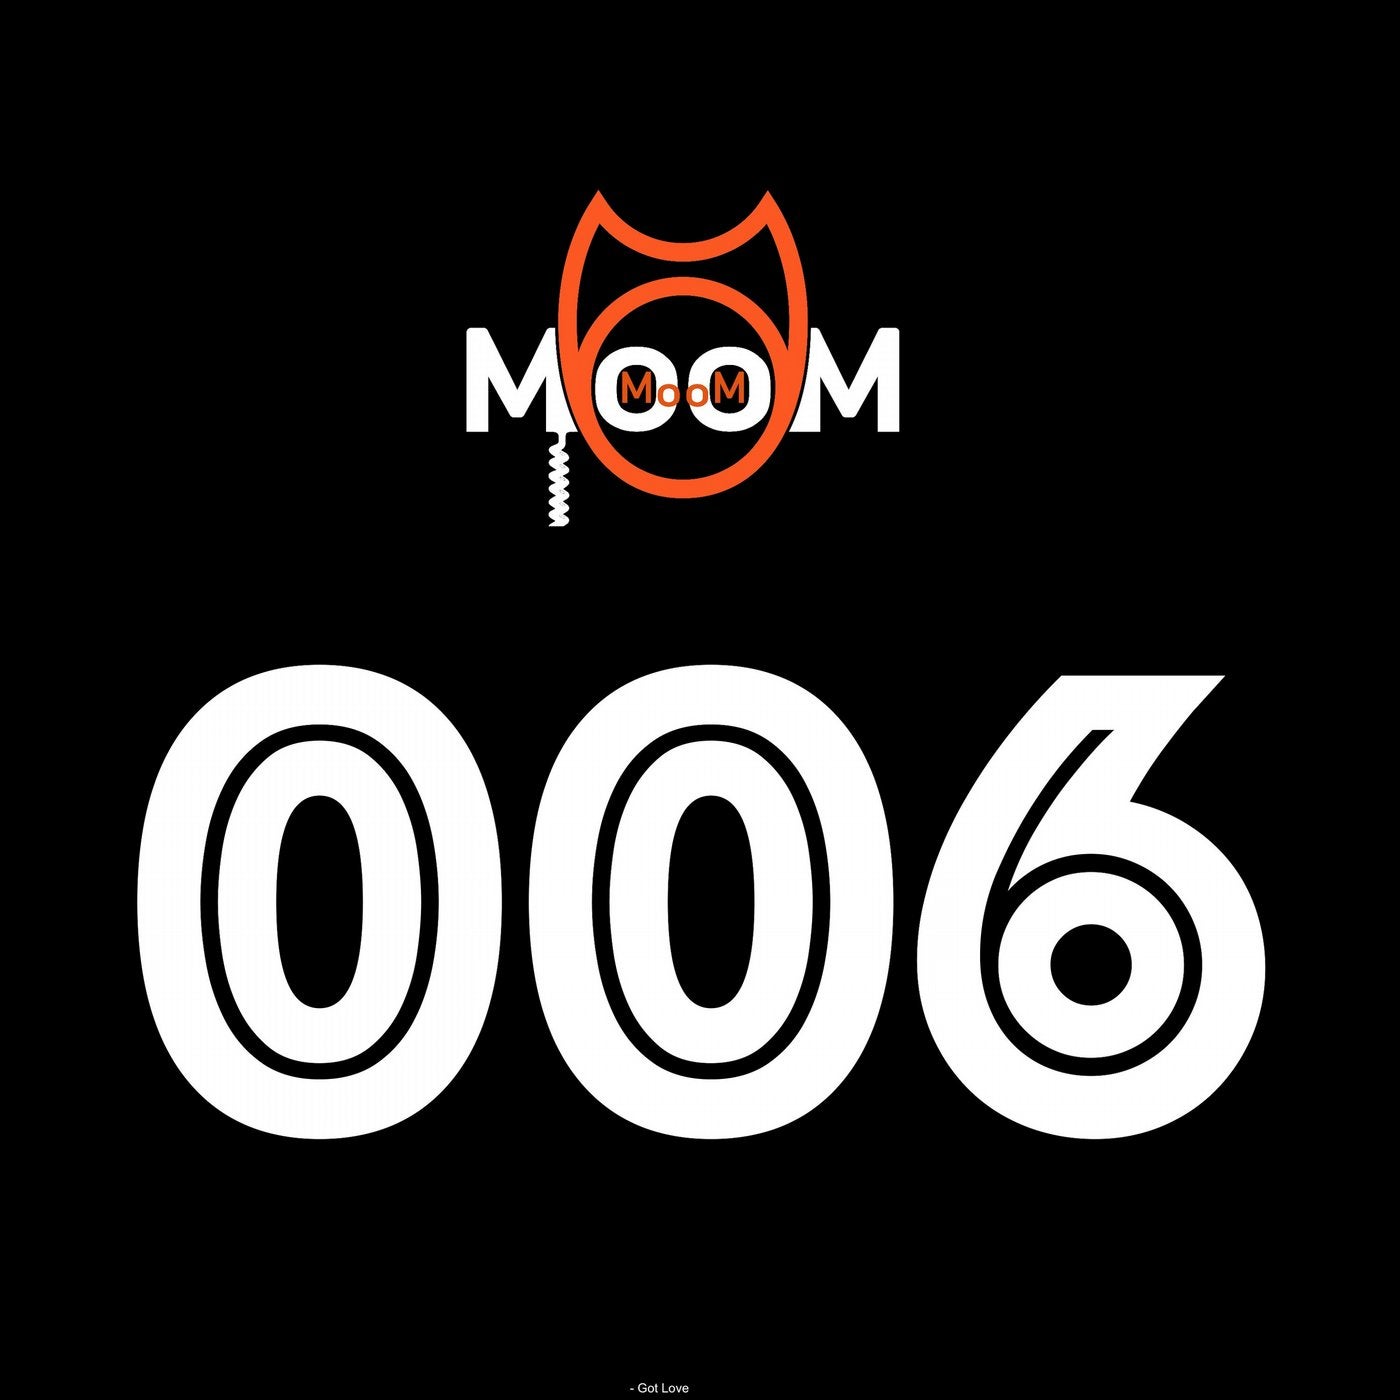 MooM 006 (Got Love)